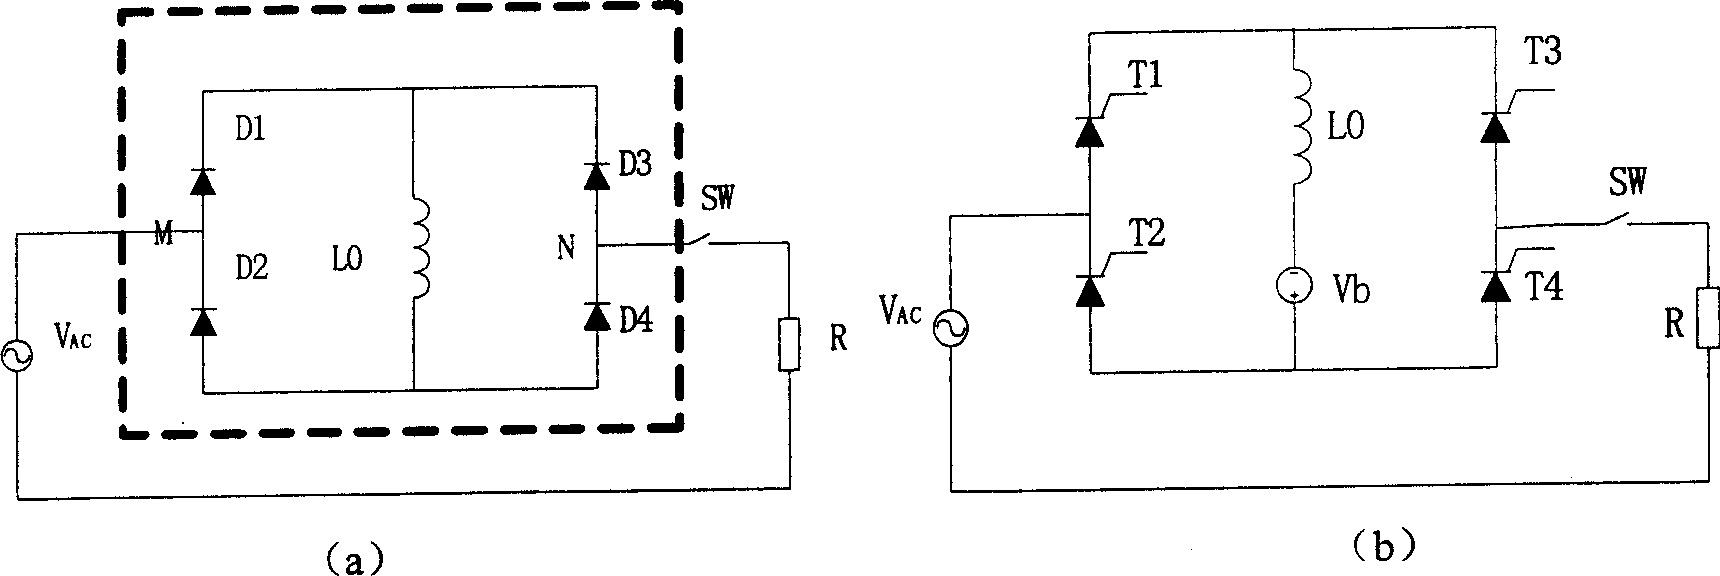 Short-circuit fault current limiter